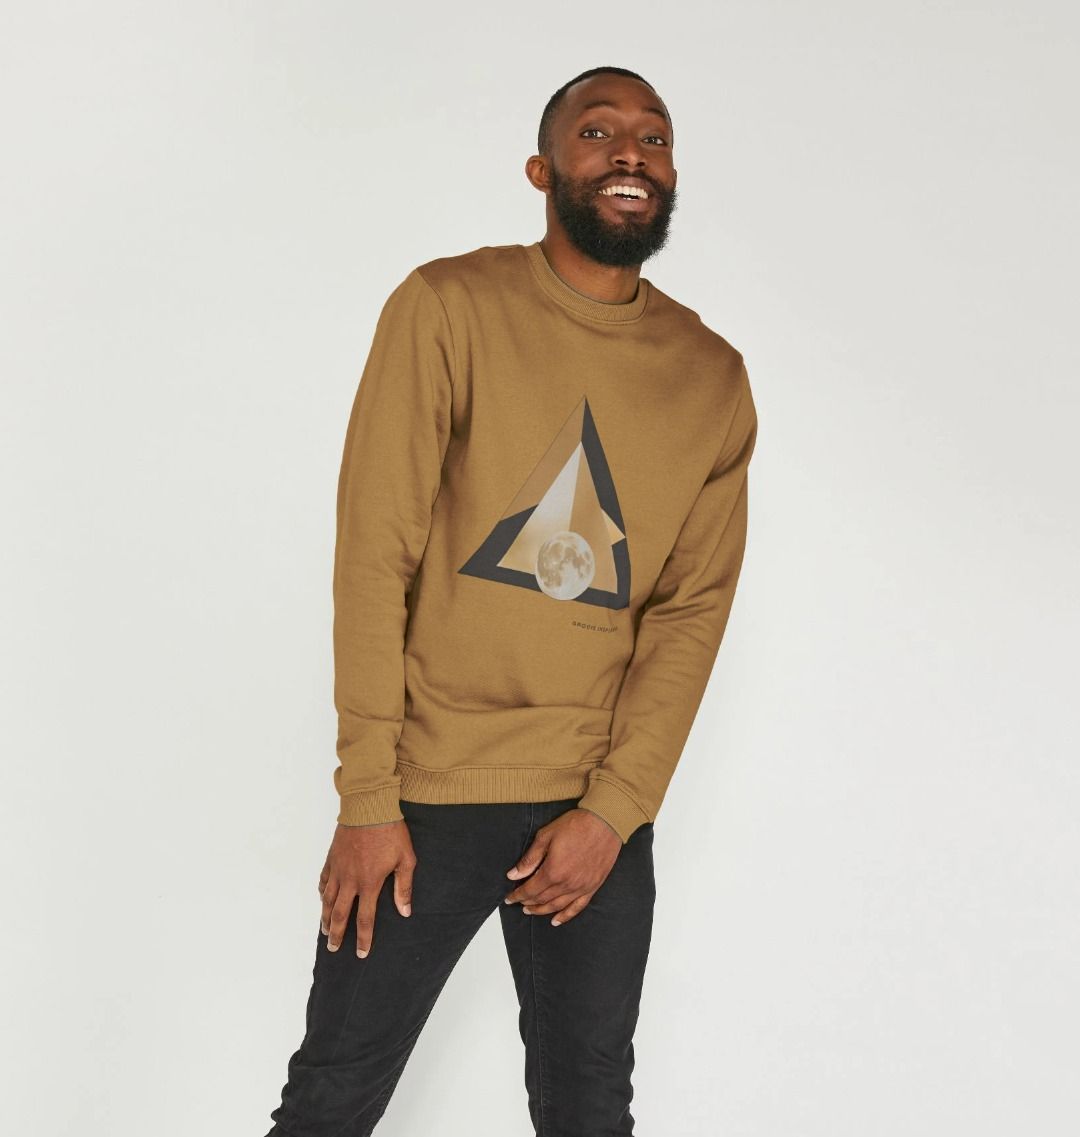 Lunar Geometry - Triangle (Crew Neck Sweater)